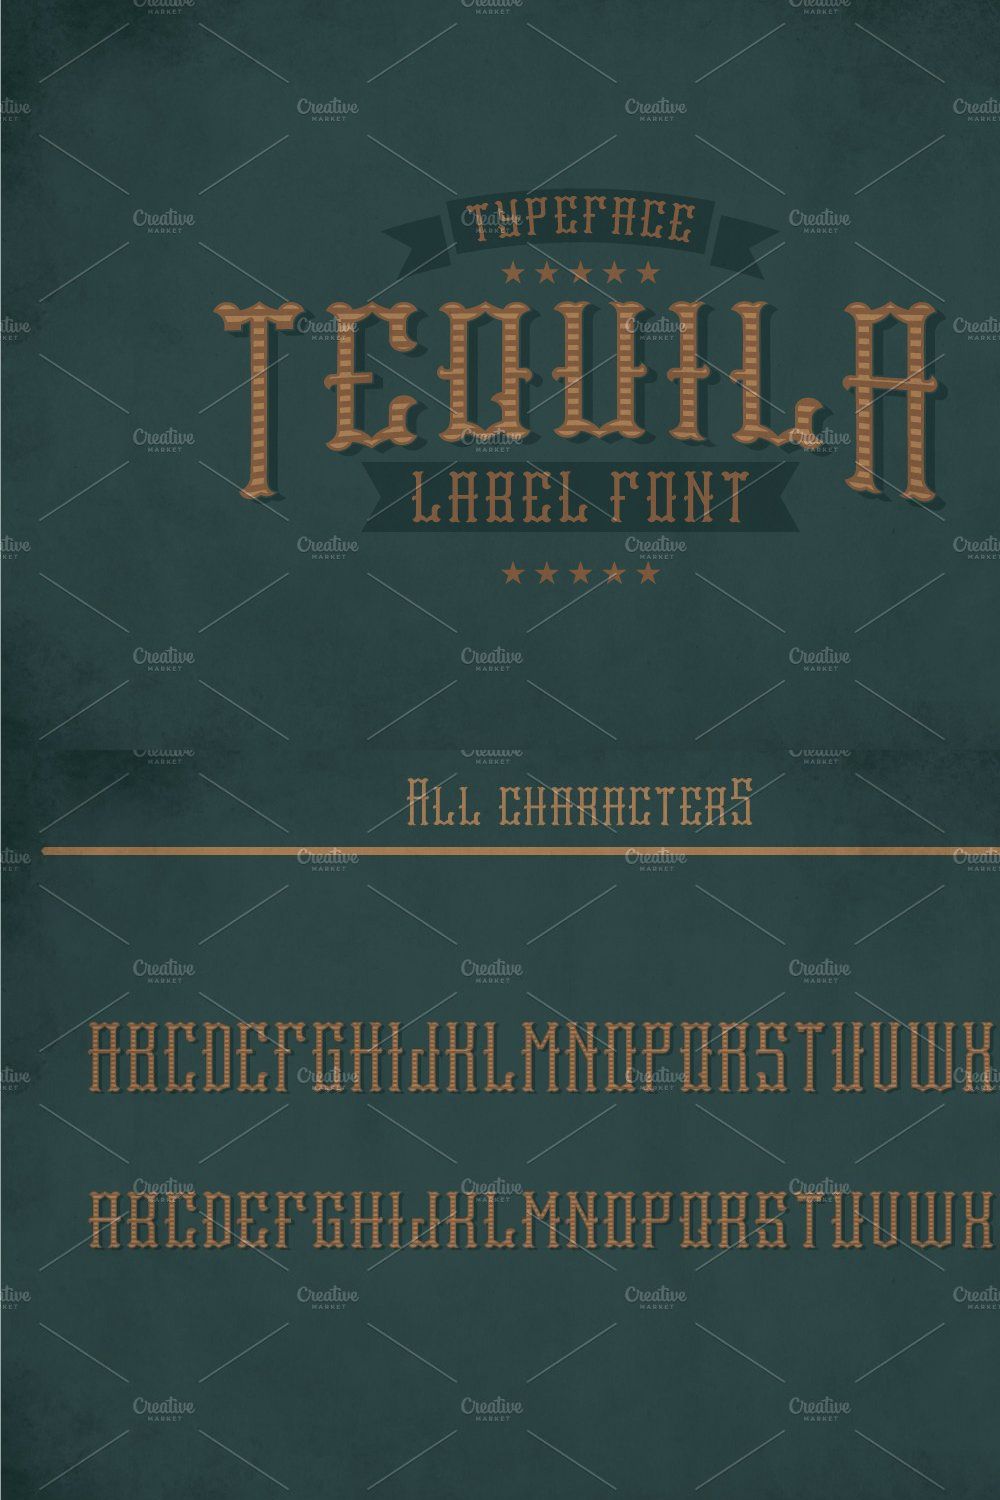 Tequila Vintage Label Typeface pinterest preview image.